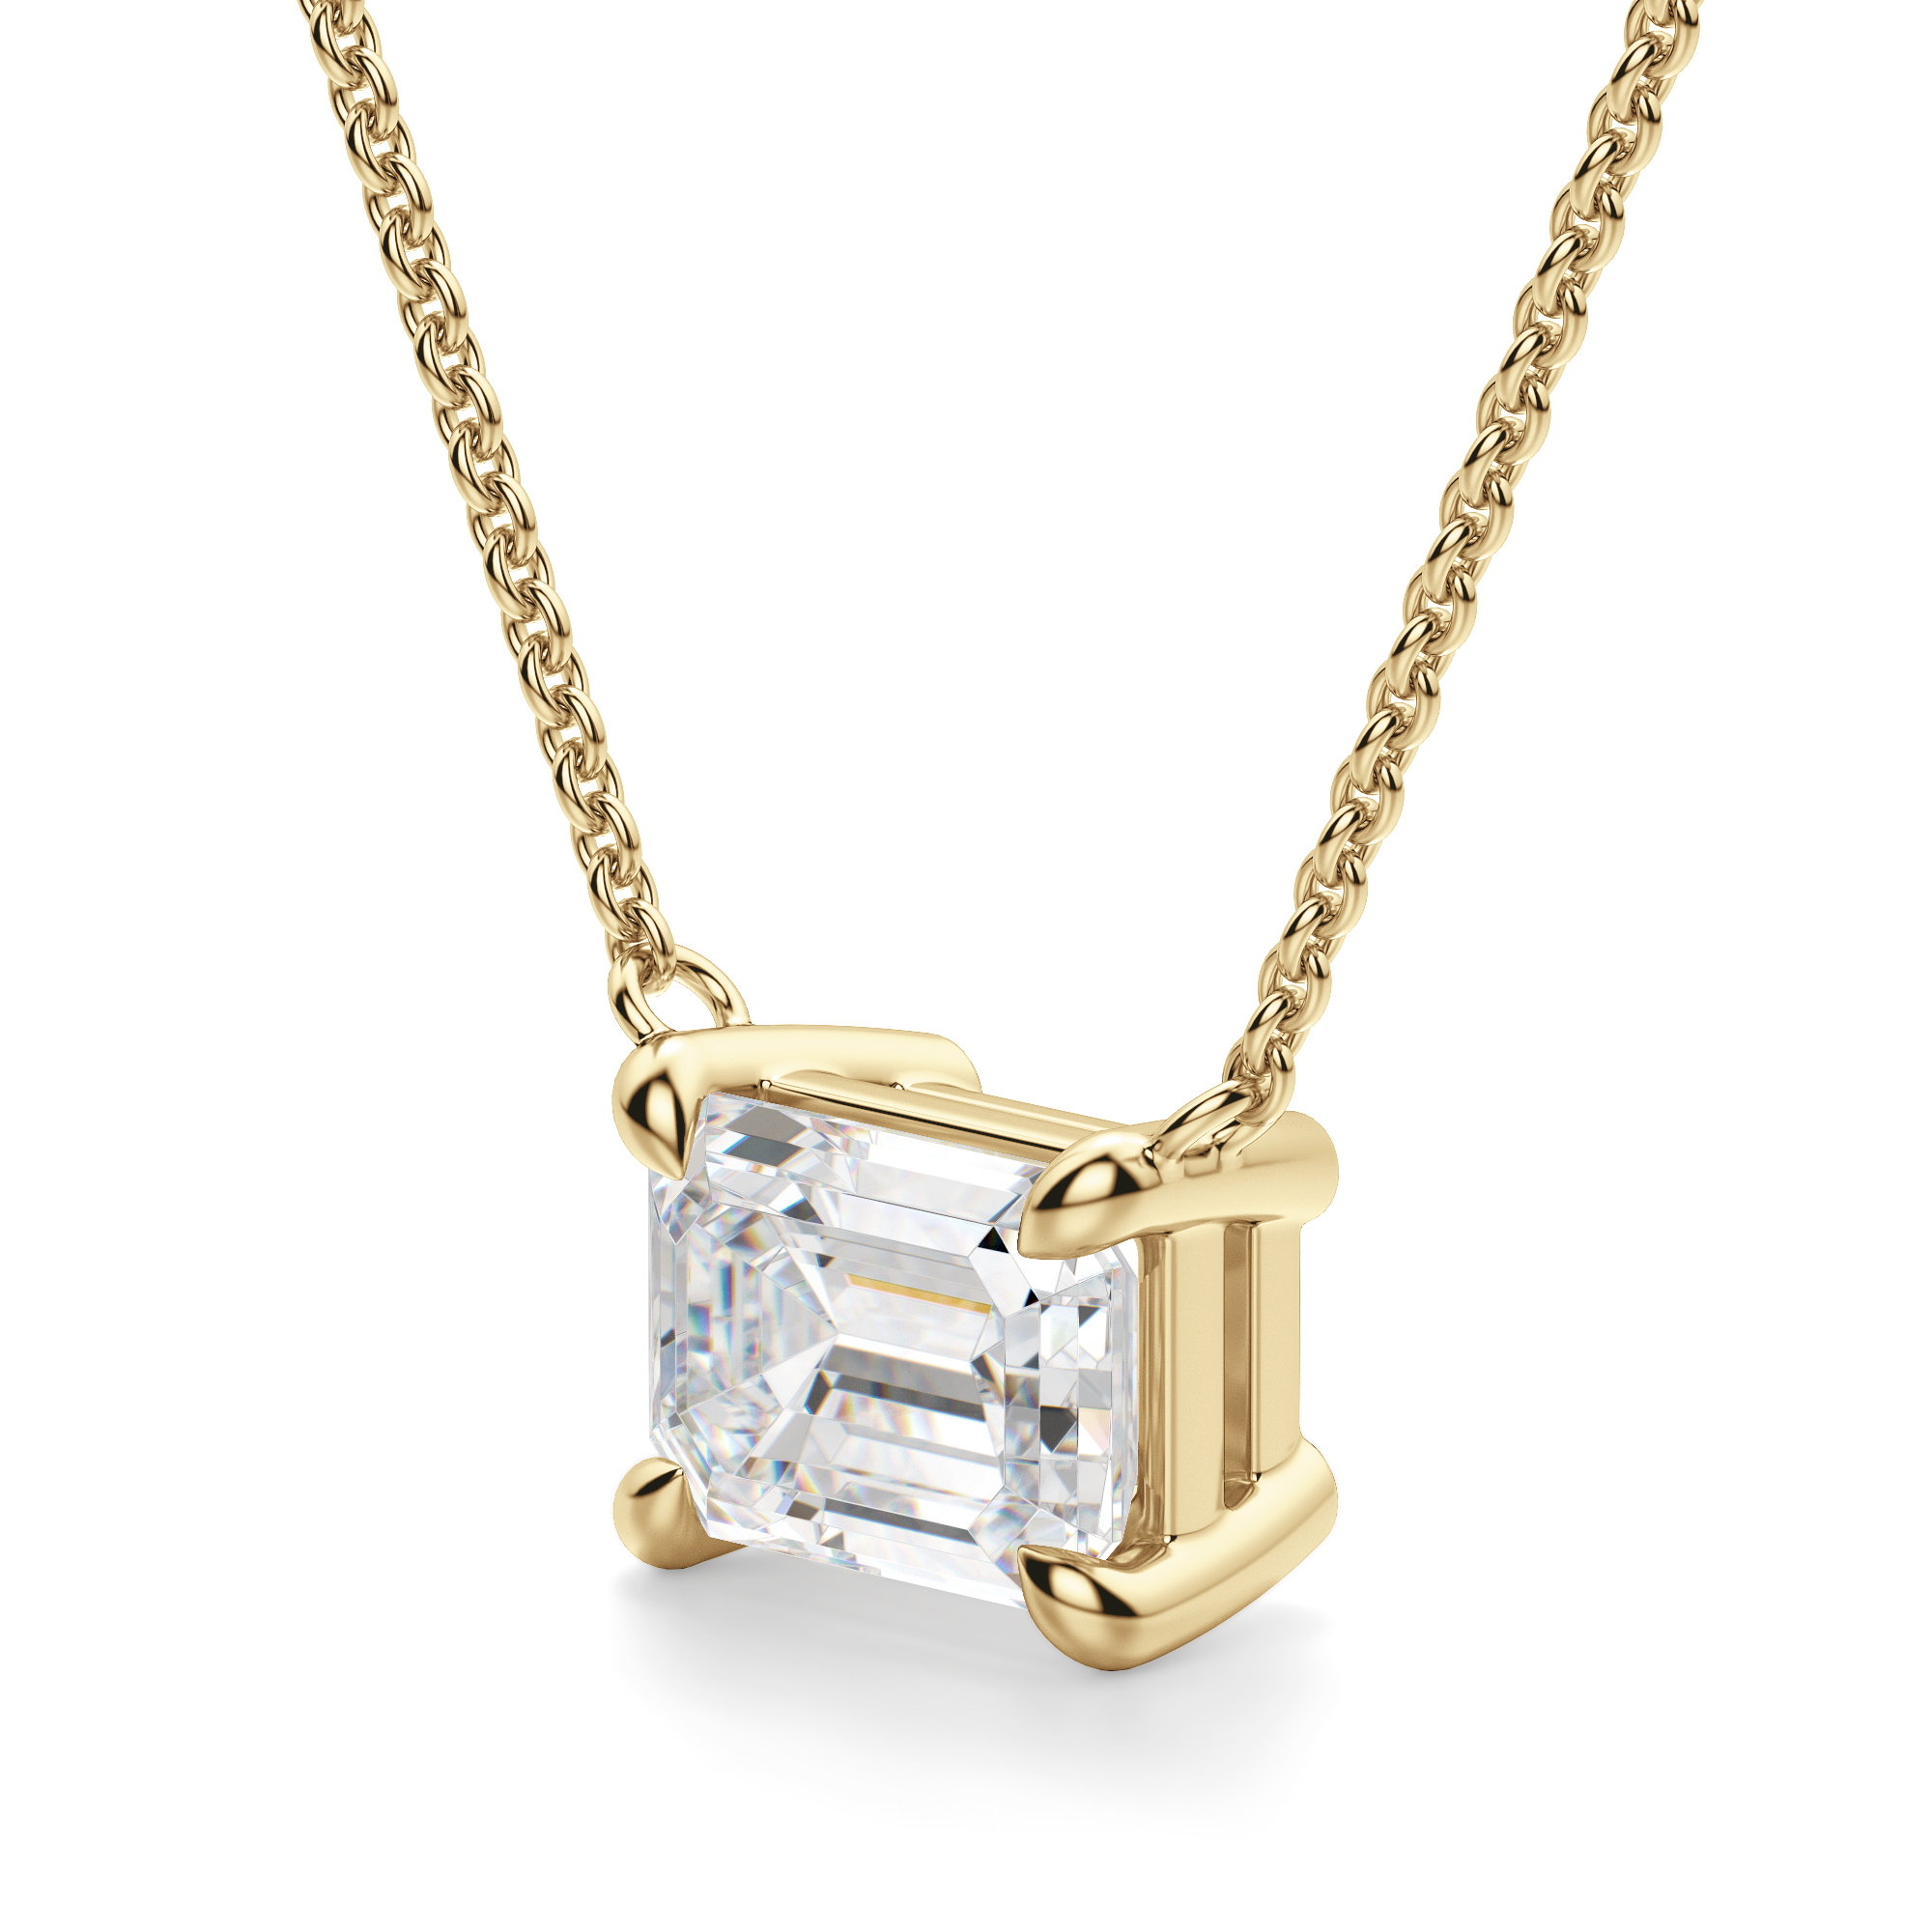 Stanley's Brilliant Cut White Diamond Charm in 14K Gold